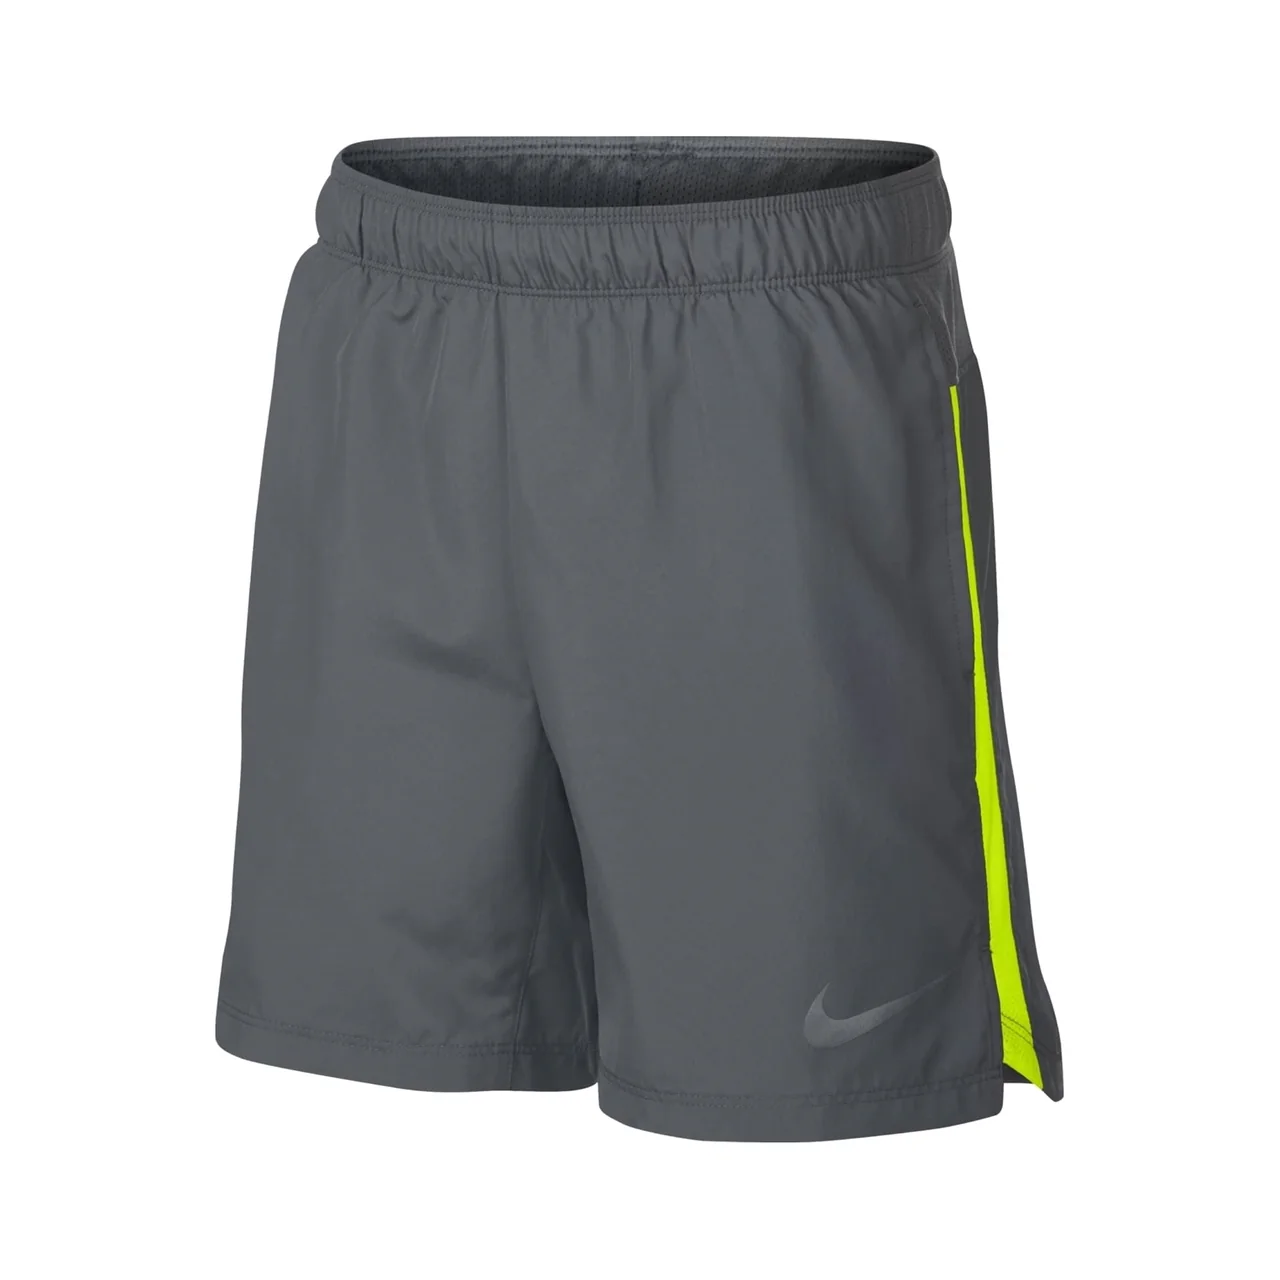 Nike Challenger 6" Shorts Boy Grey/Volt